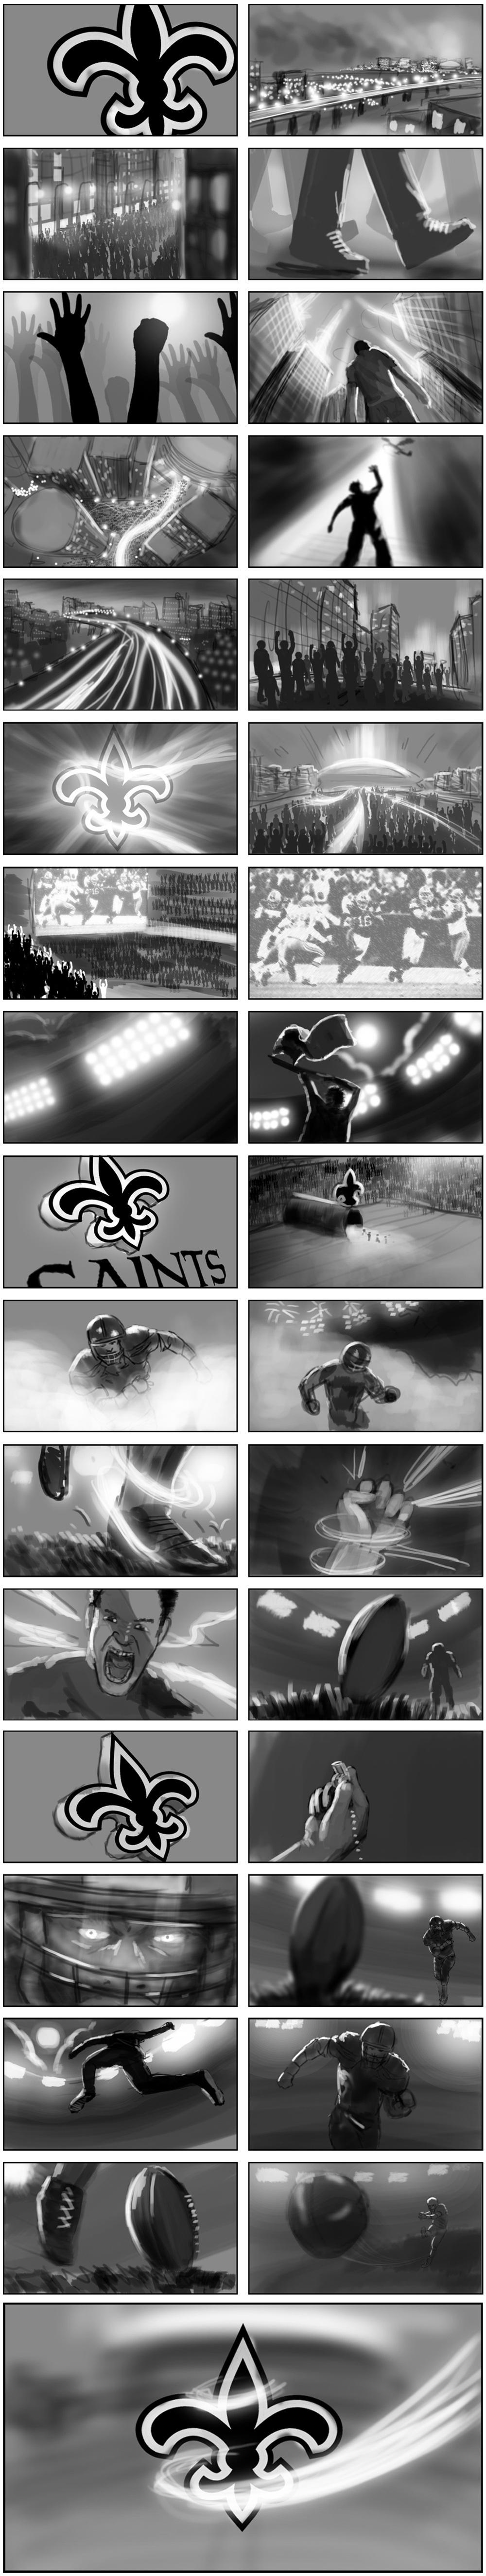 New Orleans Saints Storyboard 